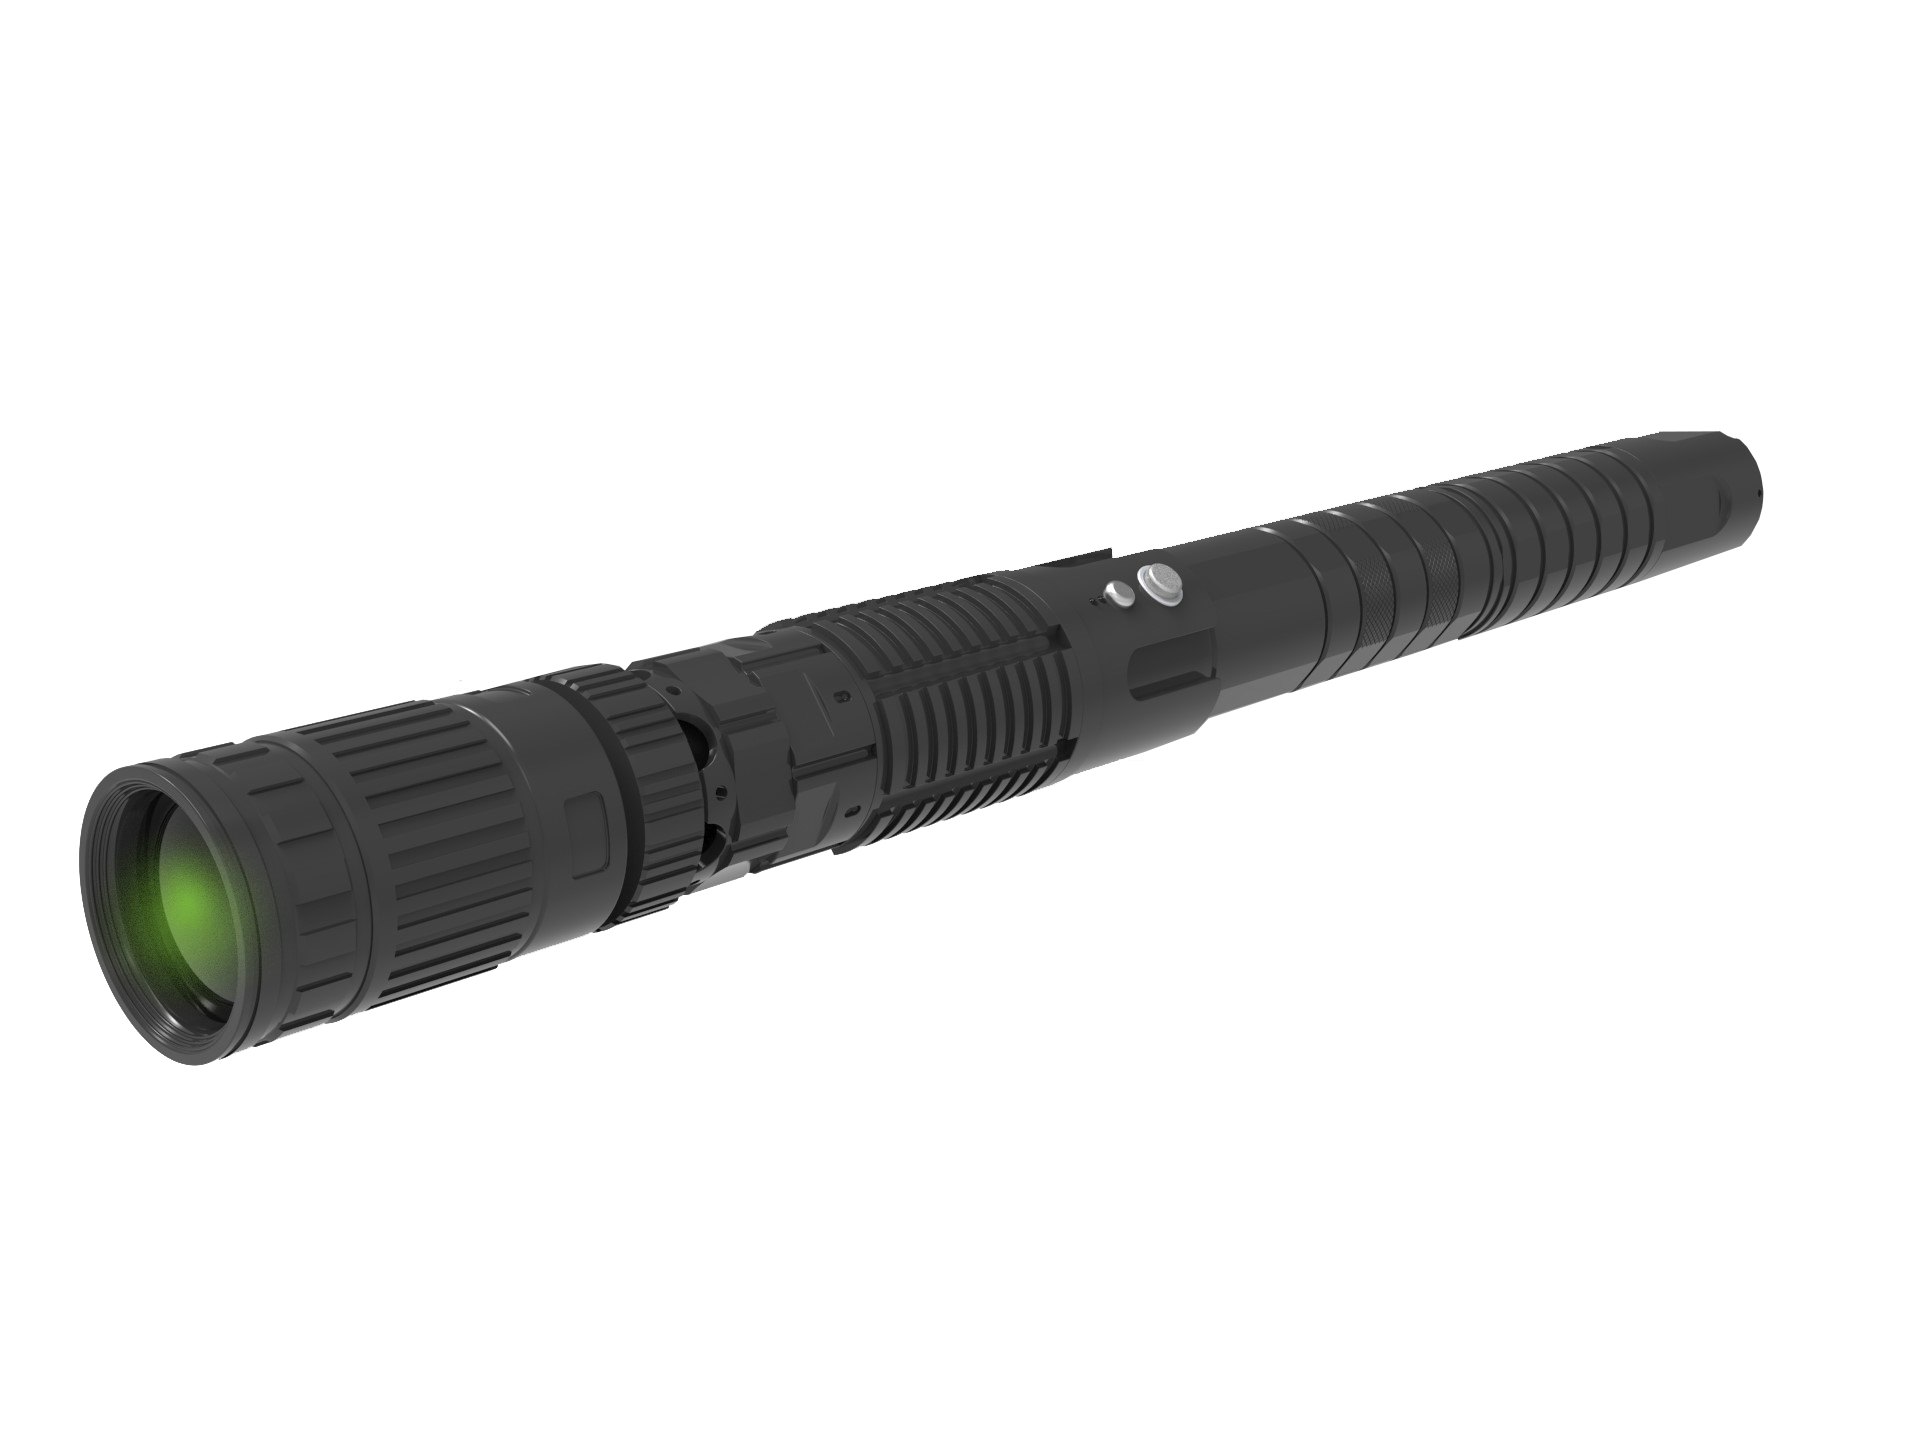 Laser Bird Scarers | Portable laser bird repellent for smart farming bird control - Bird deterrent - bird repellent - laser bird scarer